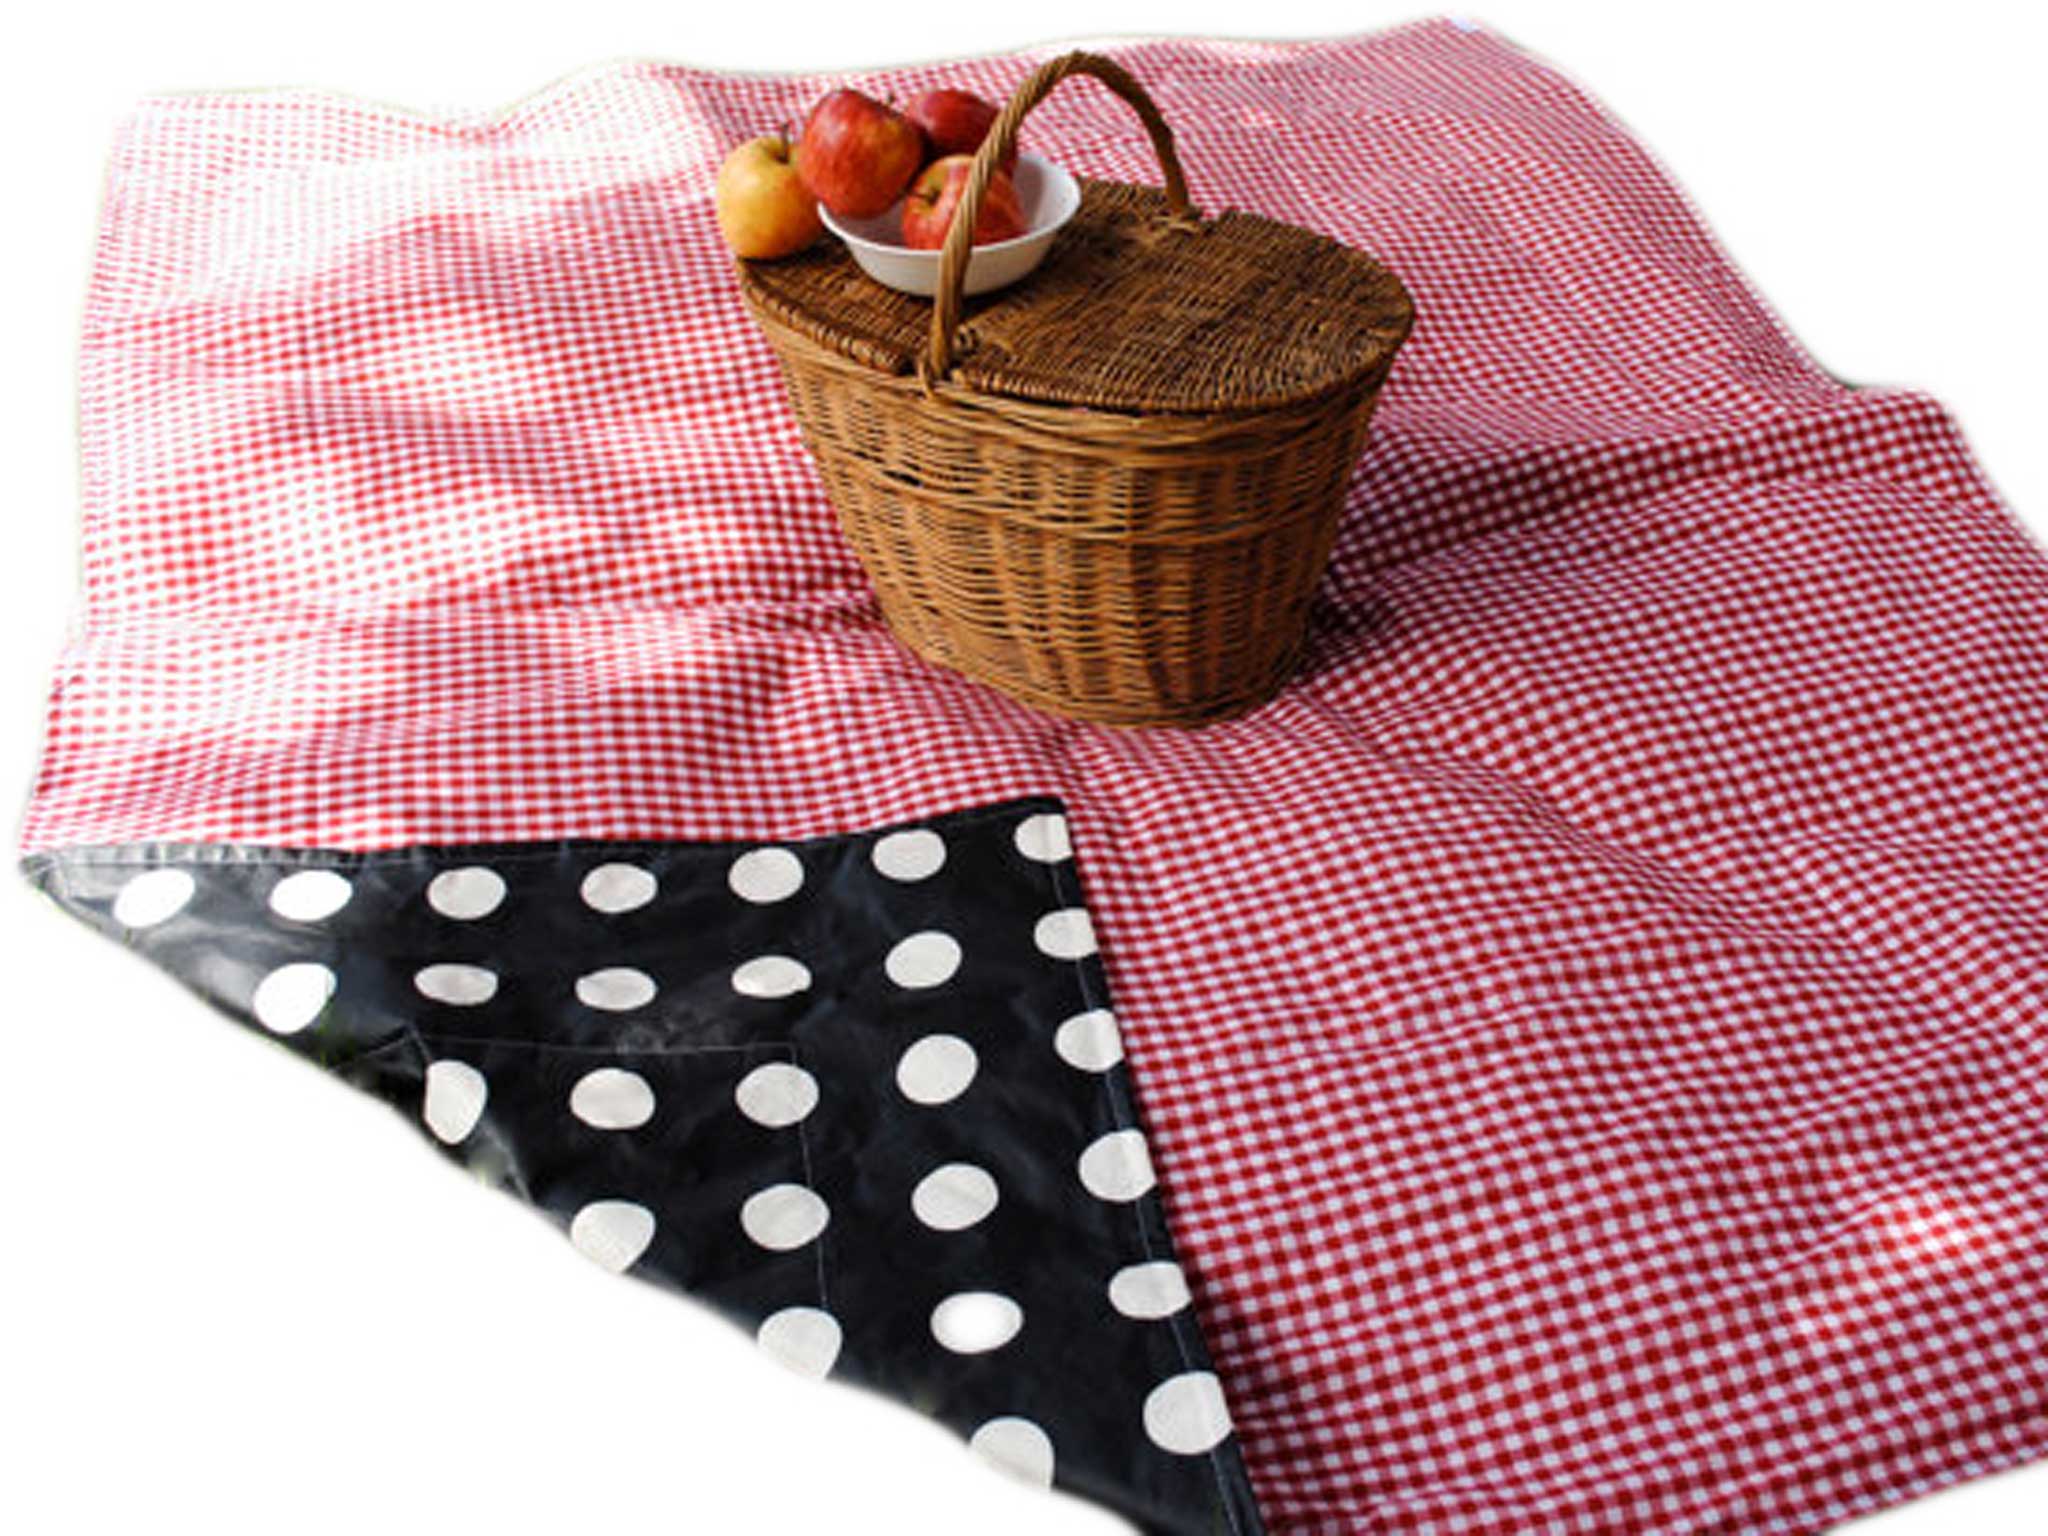 10 best picnic blankets